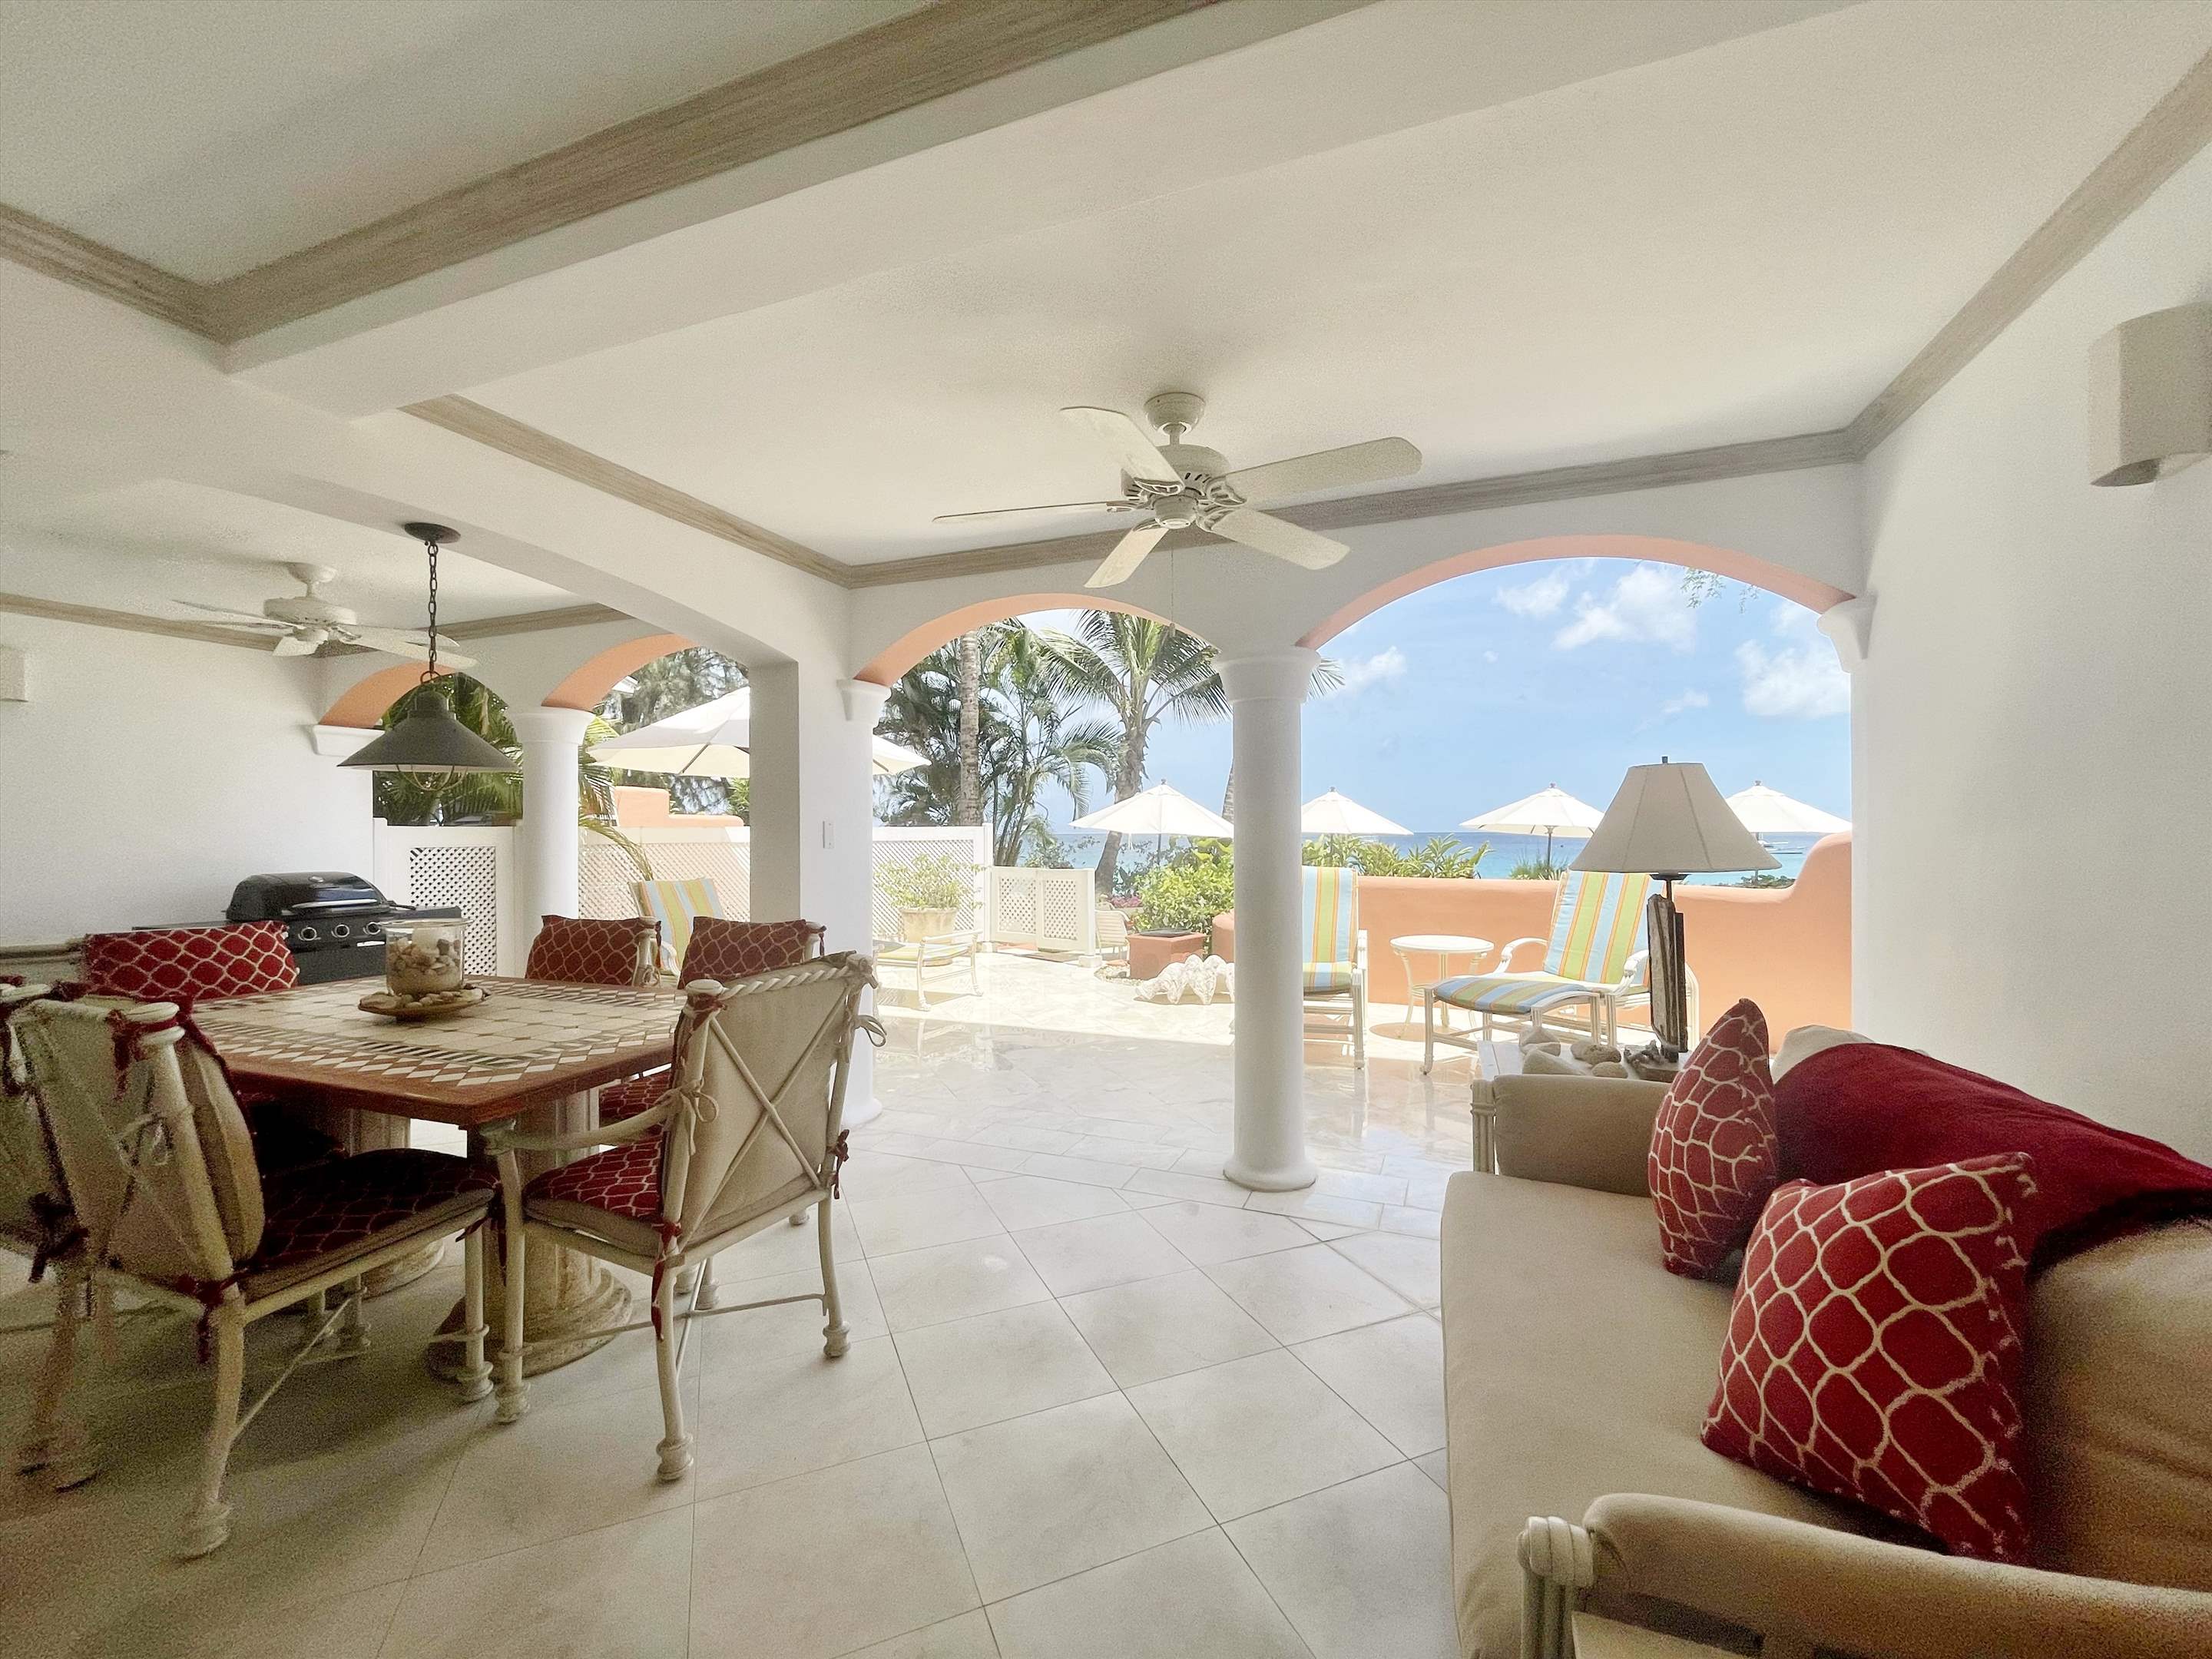 Villas on the Beach 101, 2 bedroom, 2 bedroom apartment in St. James & West Coast, Barbados Photo #9